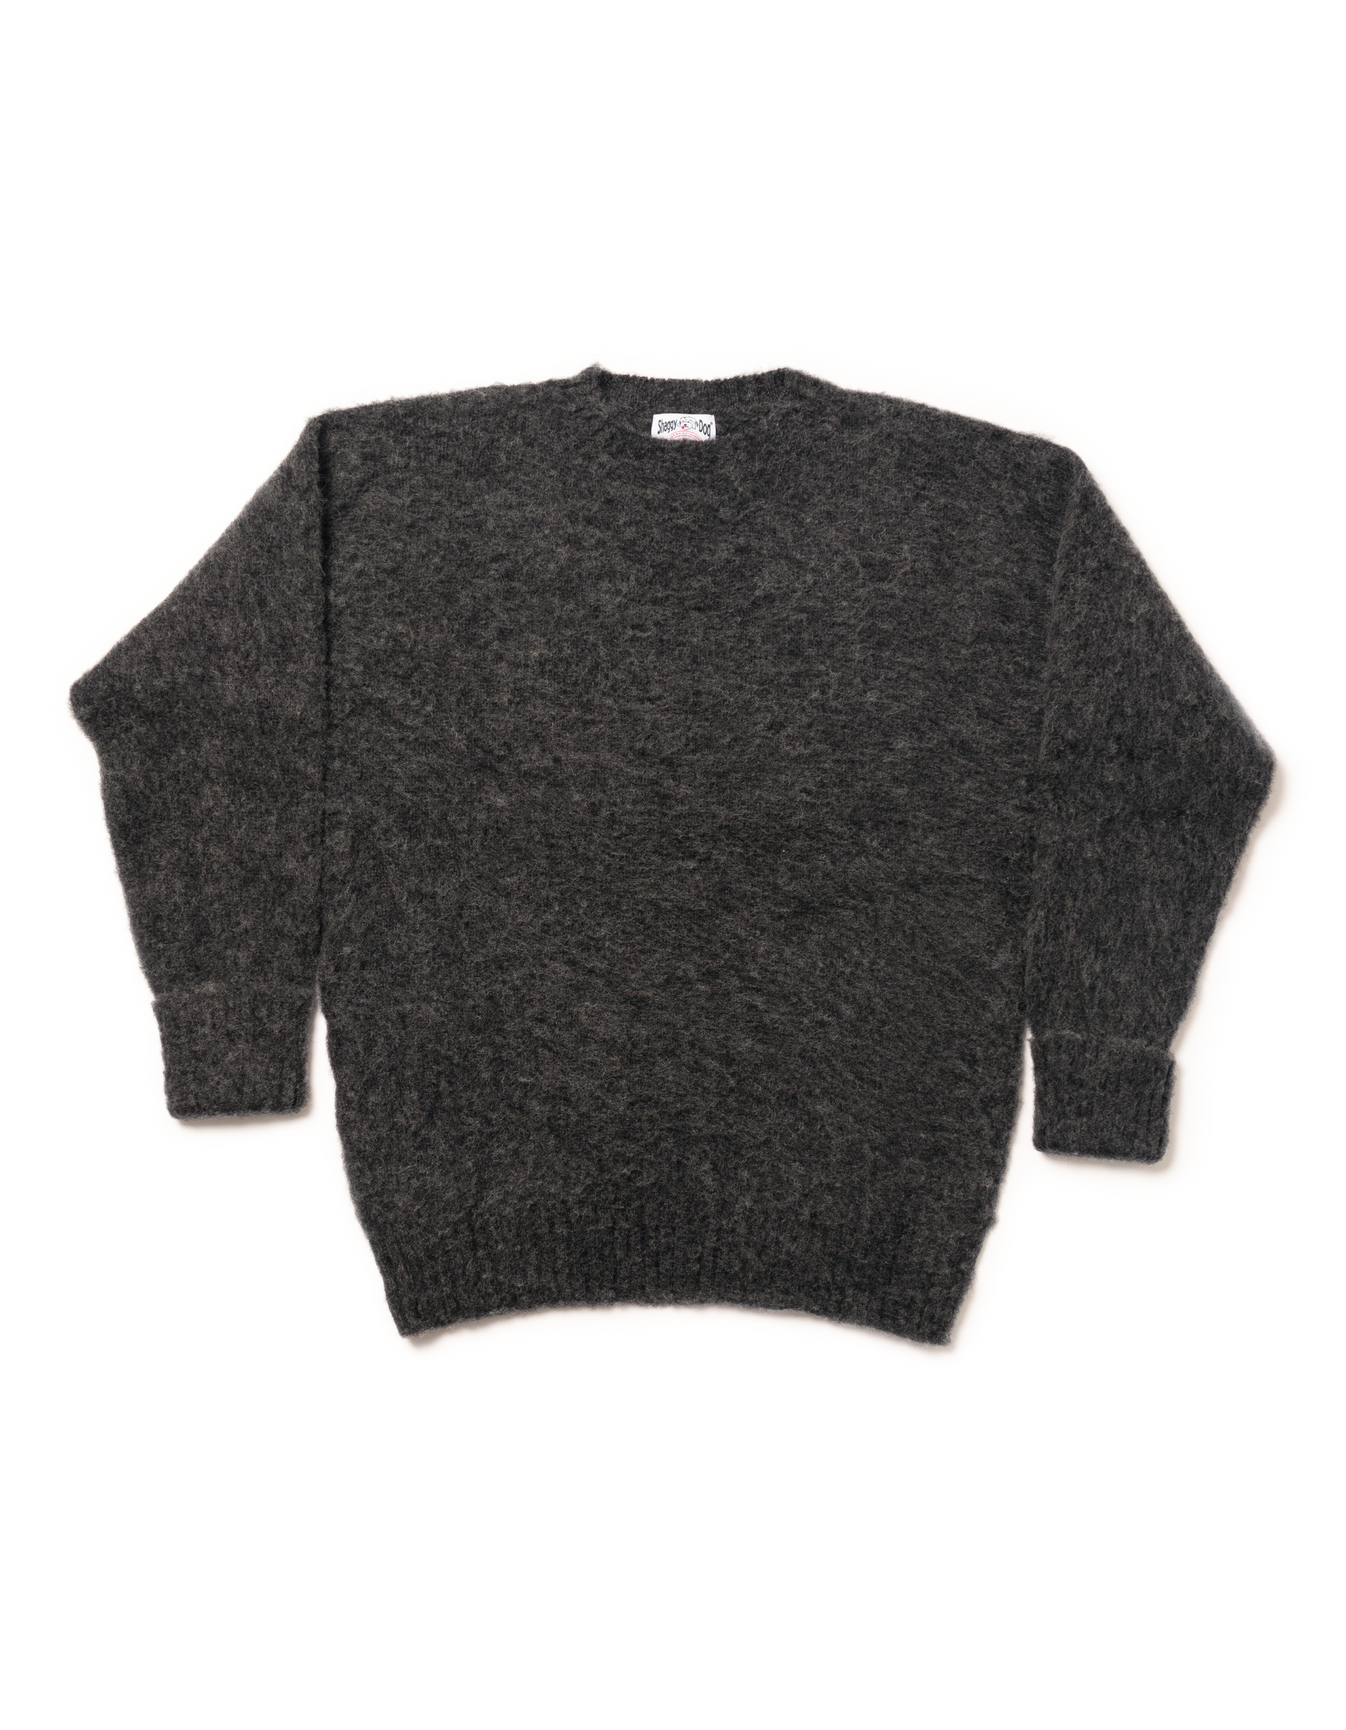 Shaggy Dog Sweater Grey - Classic Fit| Men's Shaggy Dog Sweater – J. PRESS